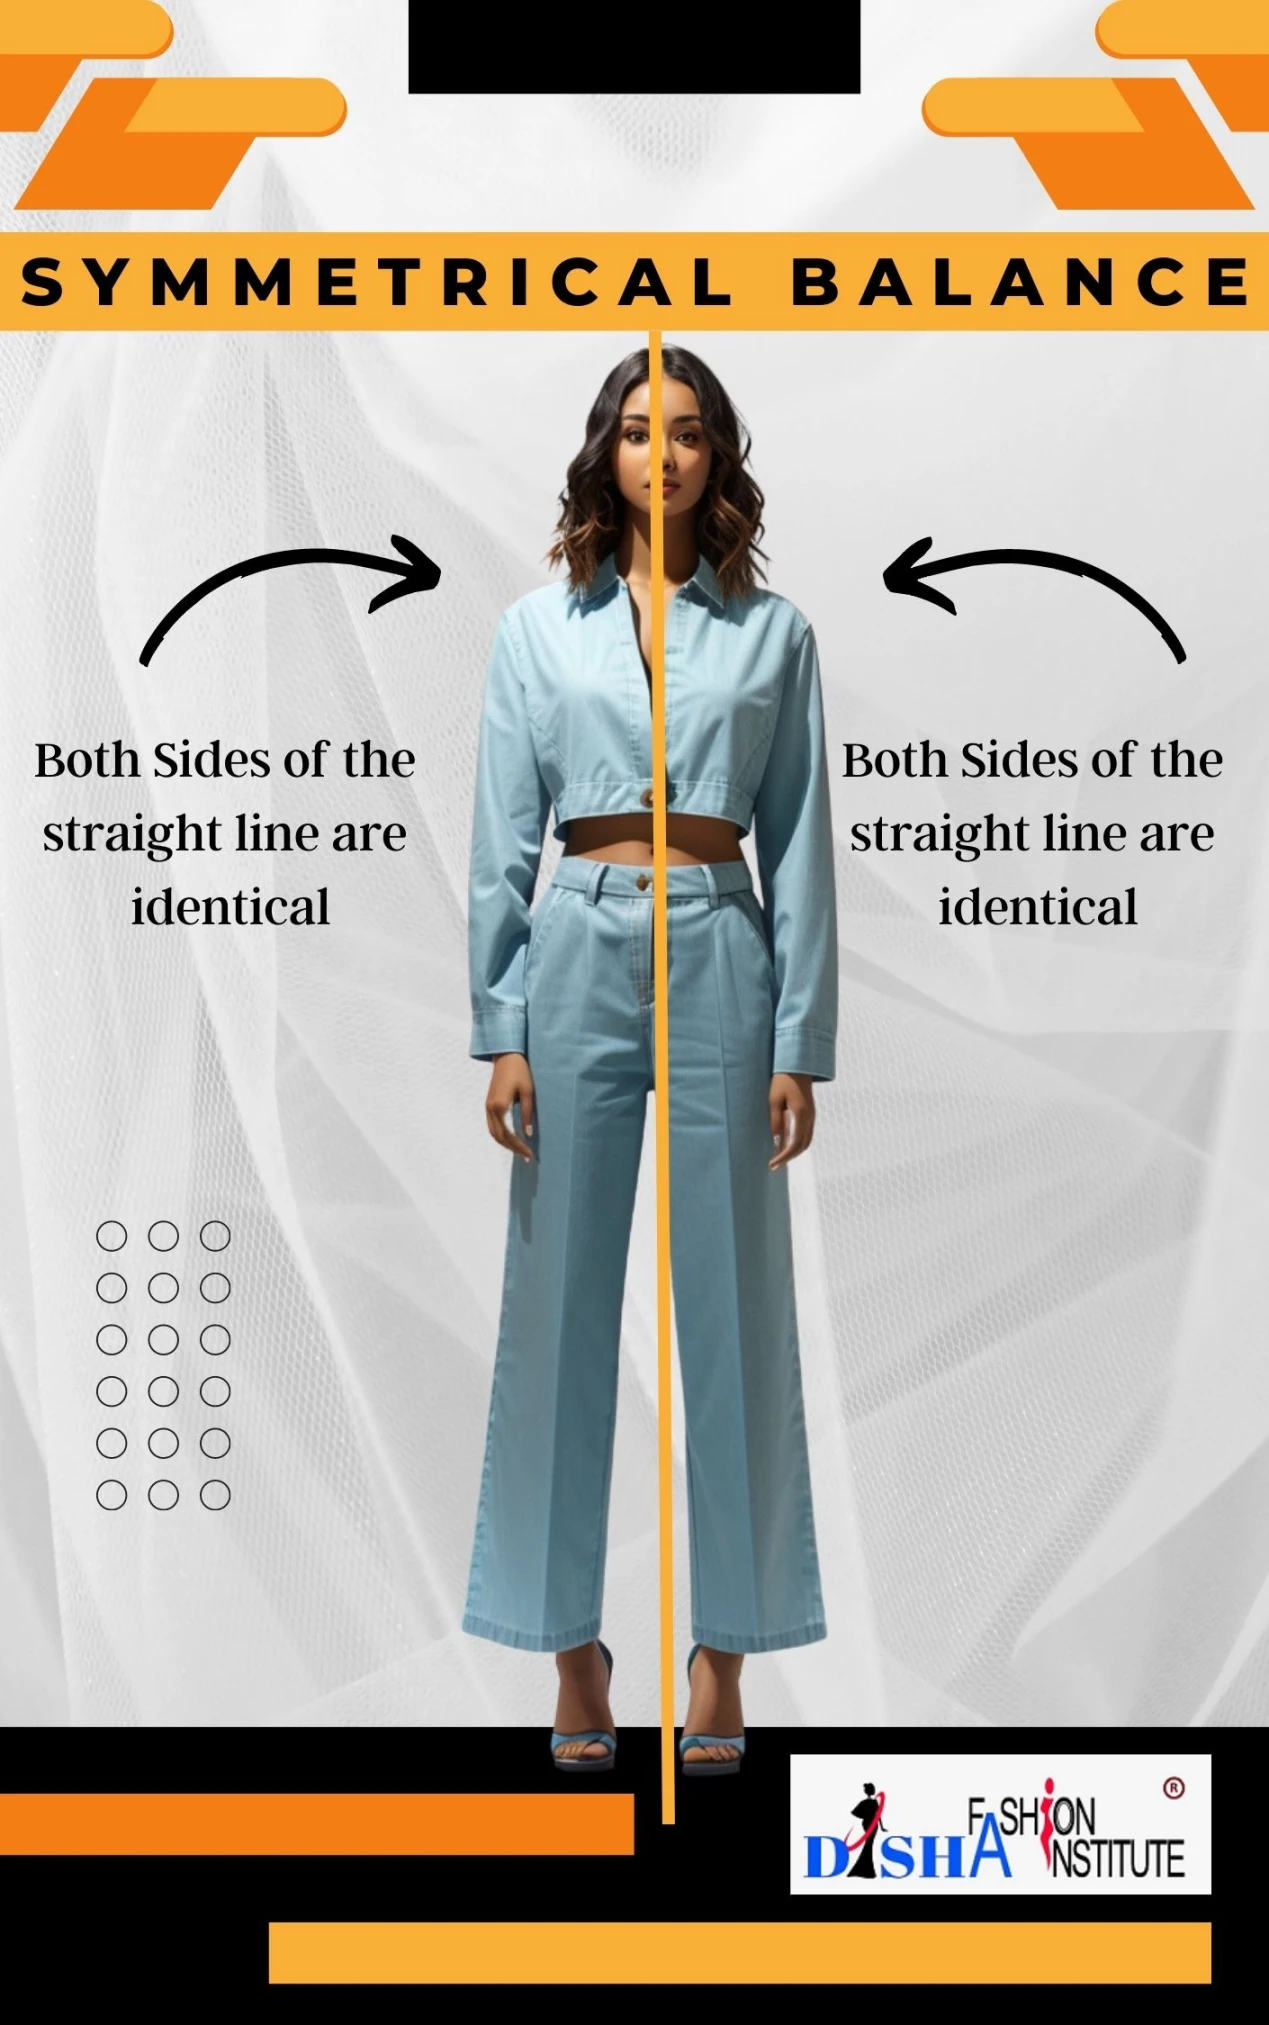 Symmetrical Balance in Fashion Design